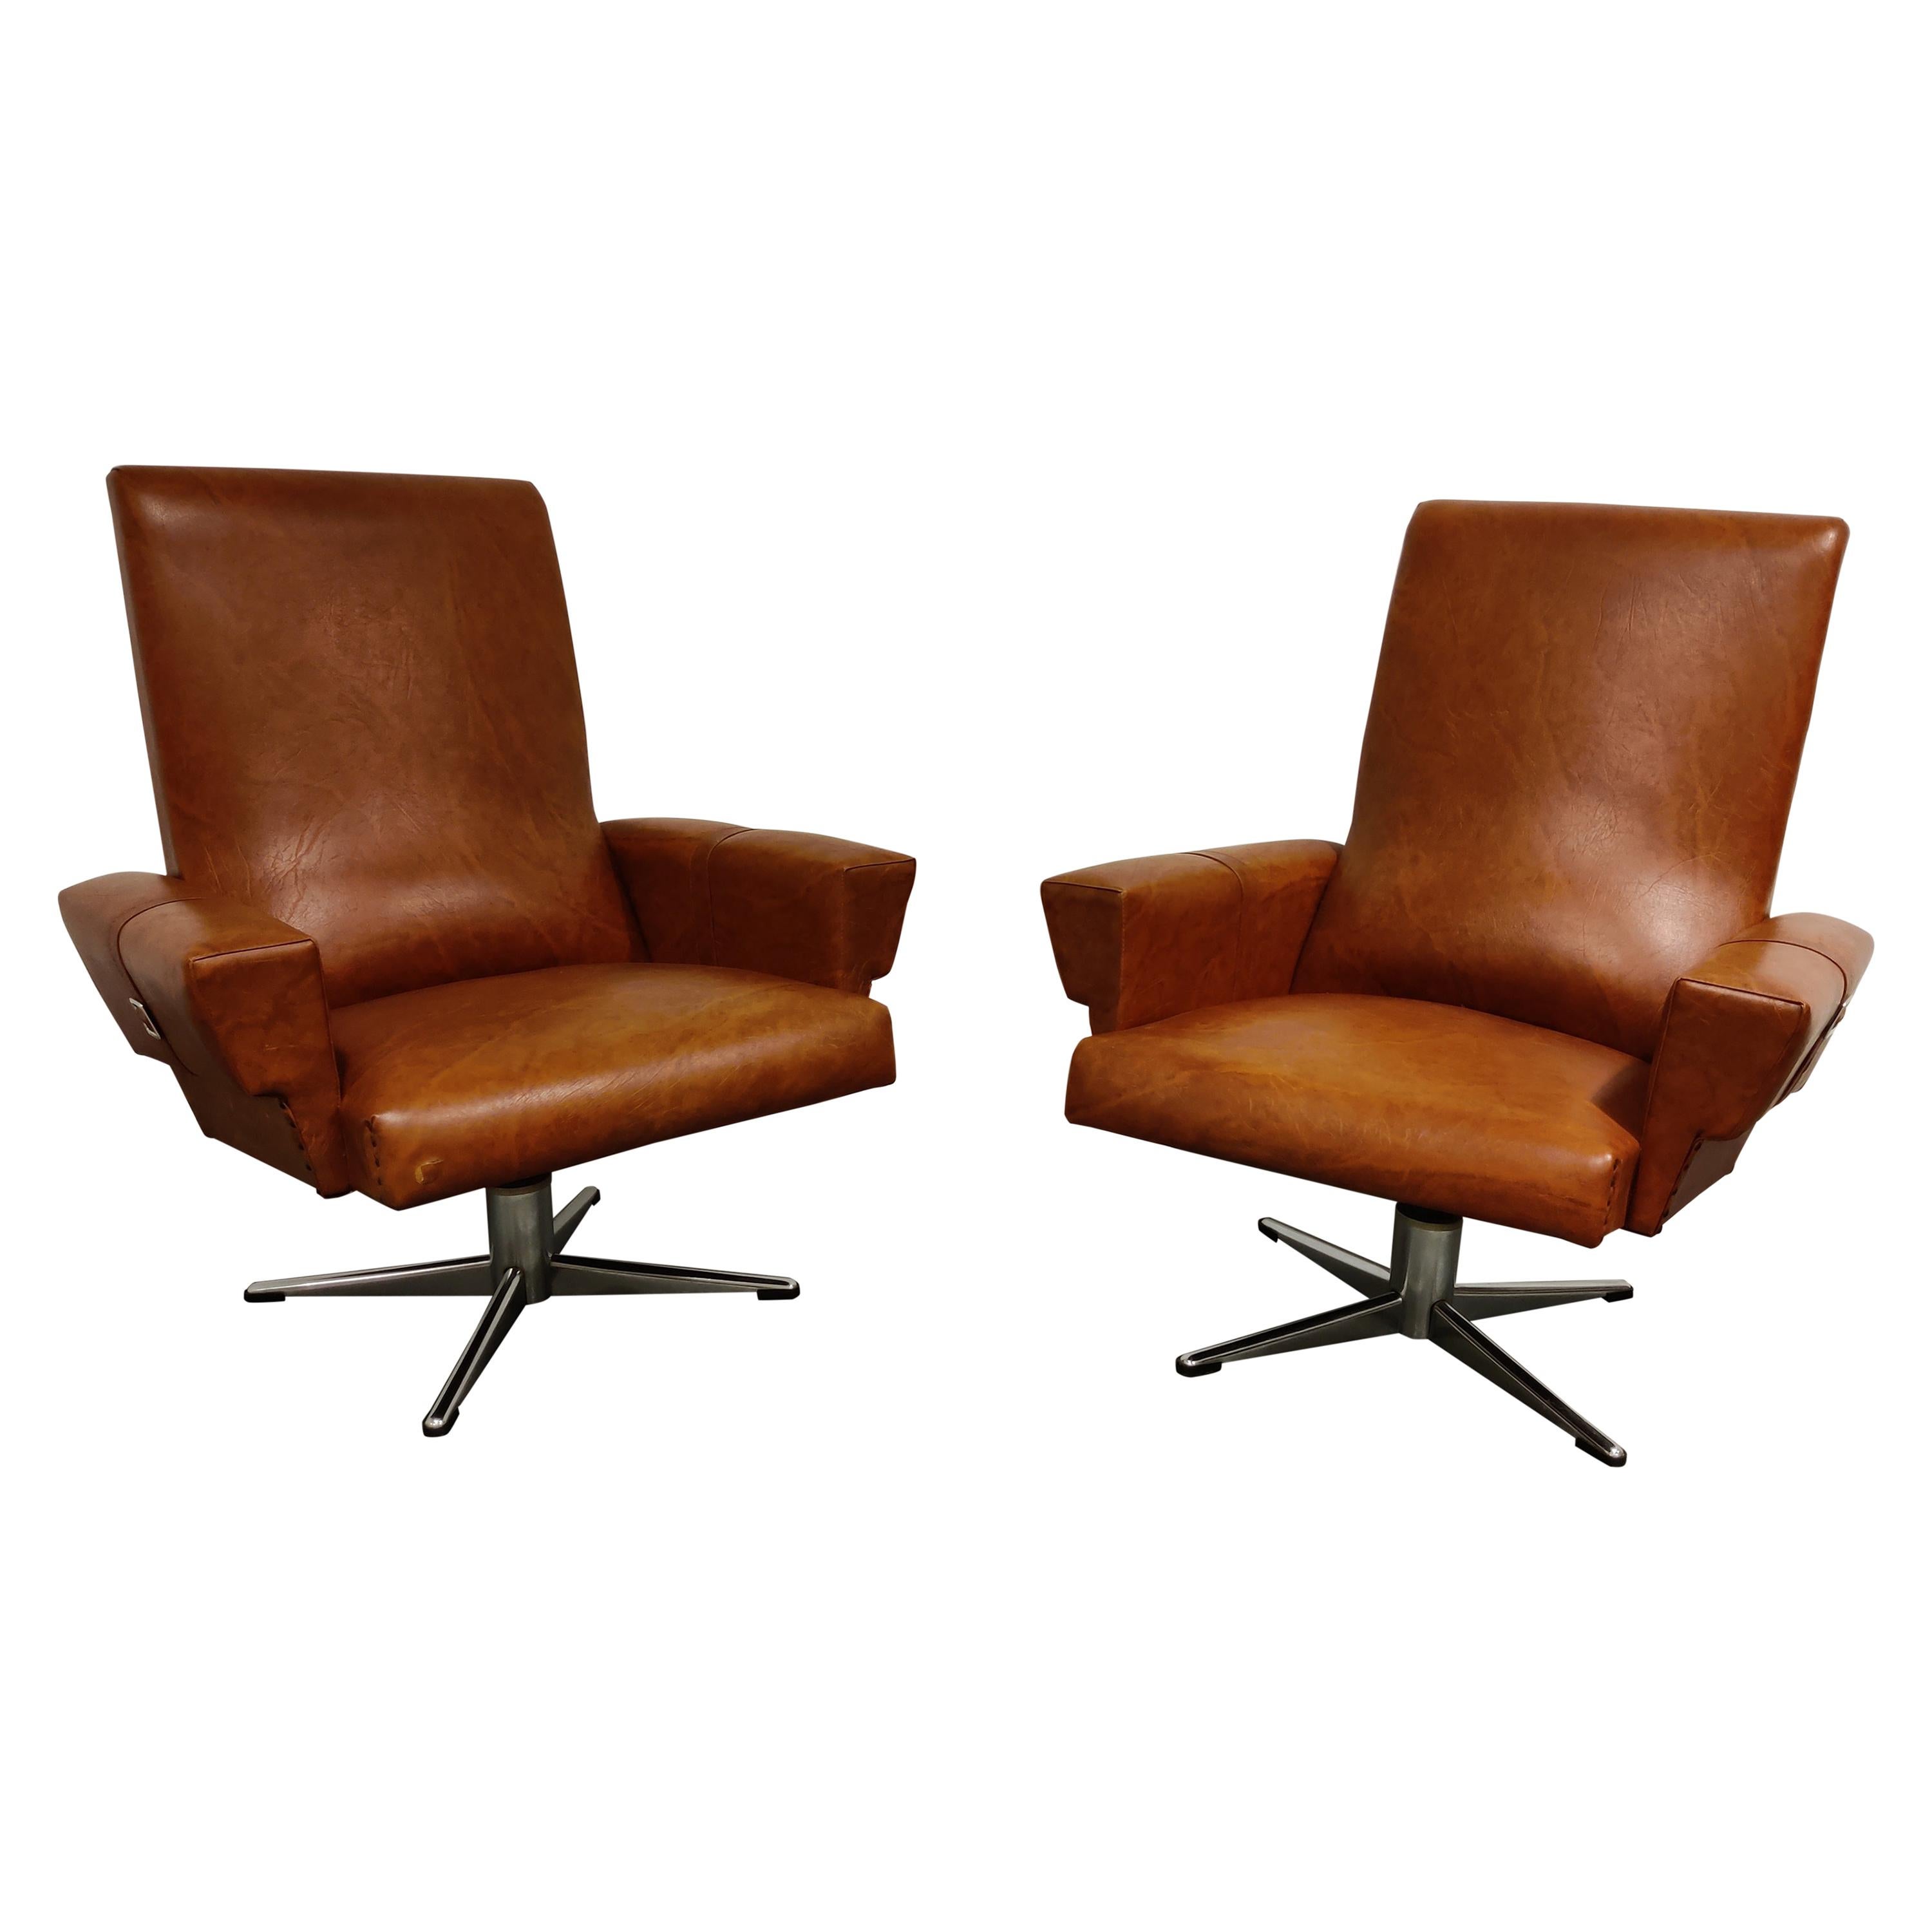 Pair of Vintage Skai and Chrome Swivel Chairs, 1960s, Belgium